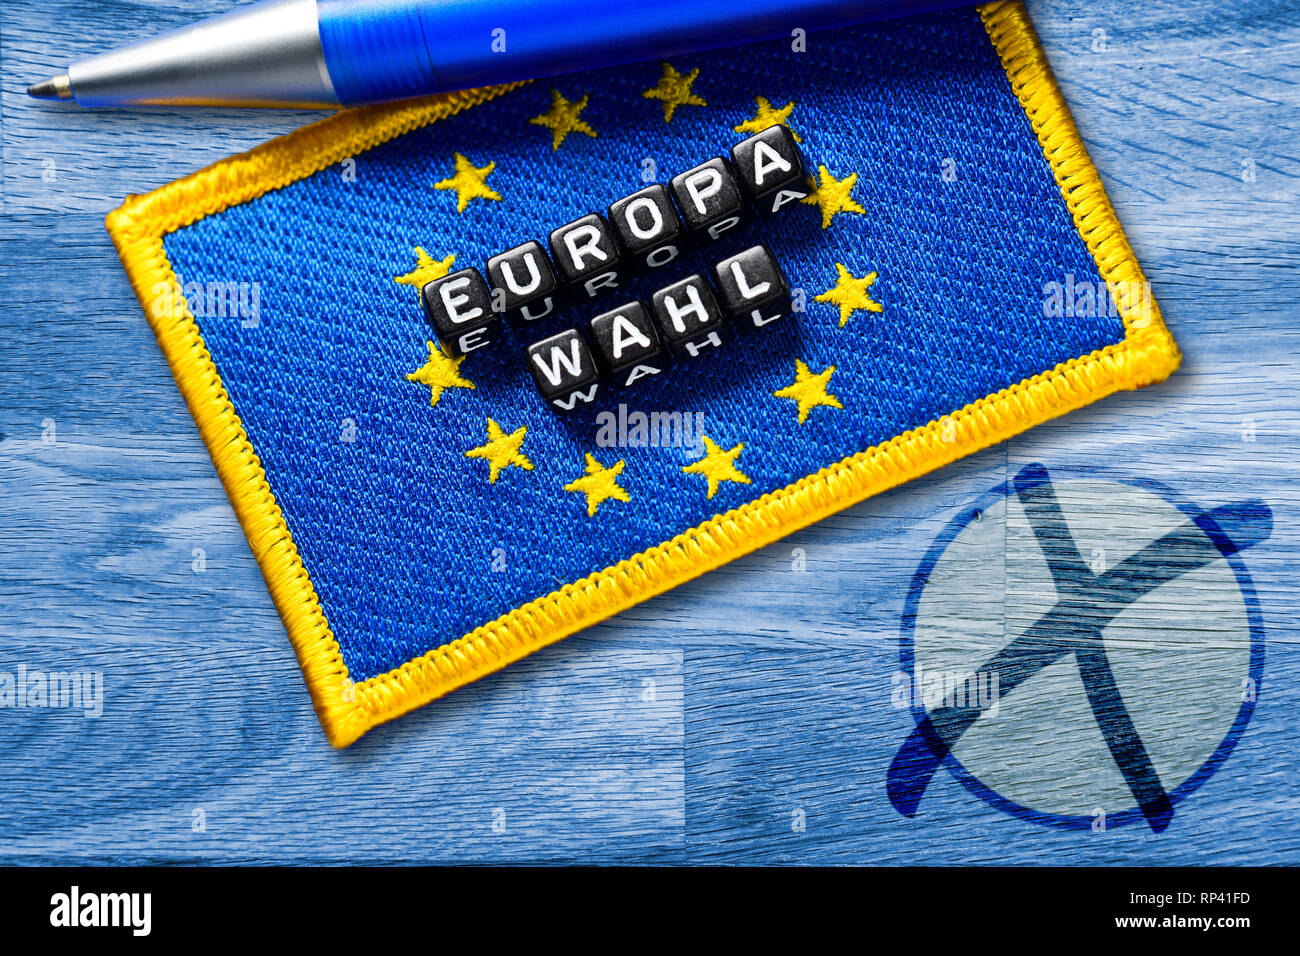 Stroke European choice on EU flag with electoral cross, Schriftzug Europawahl auf EU-Fahne mit Wahlkreuz Stock Photo